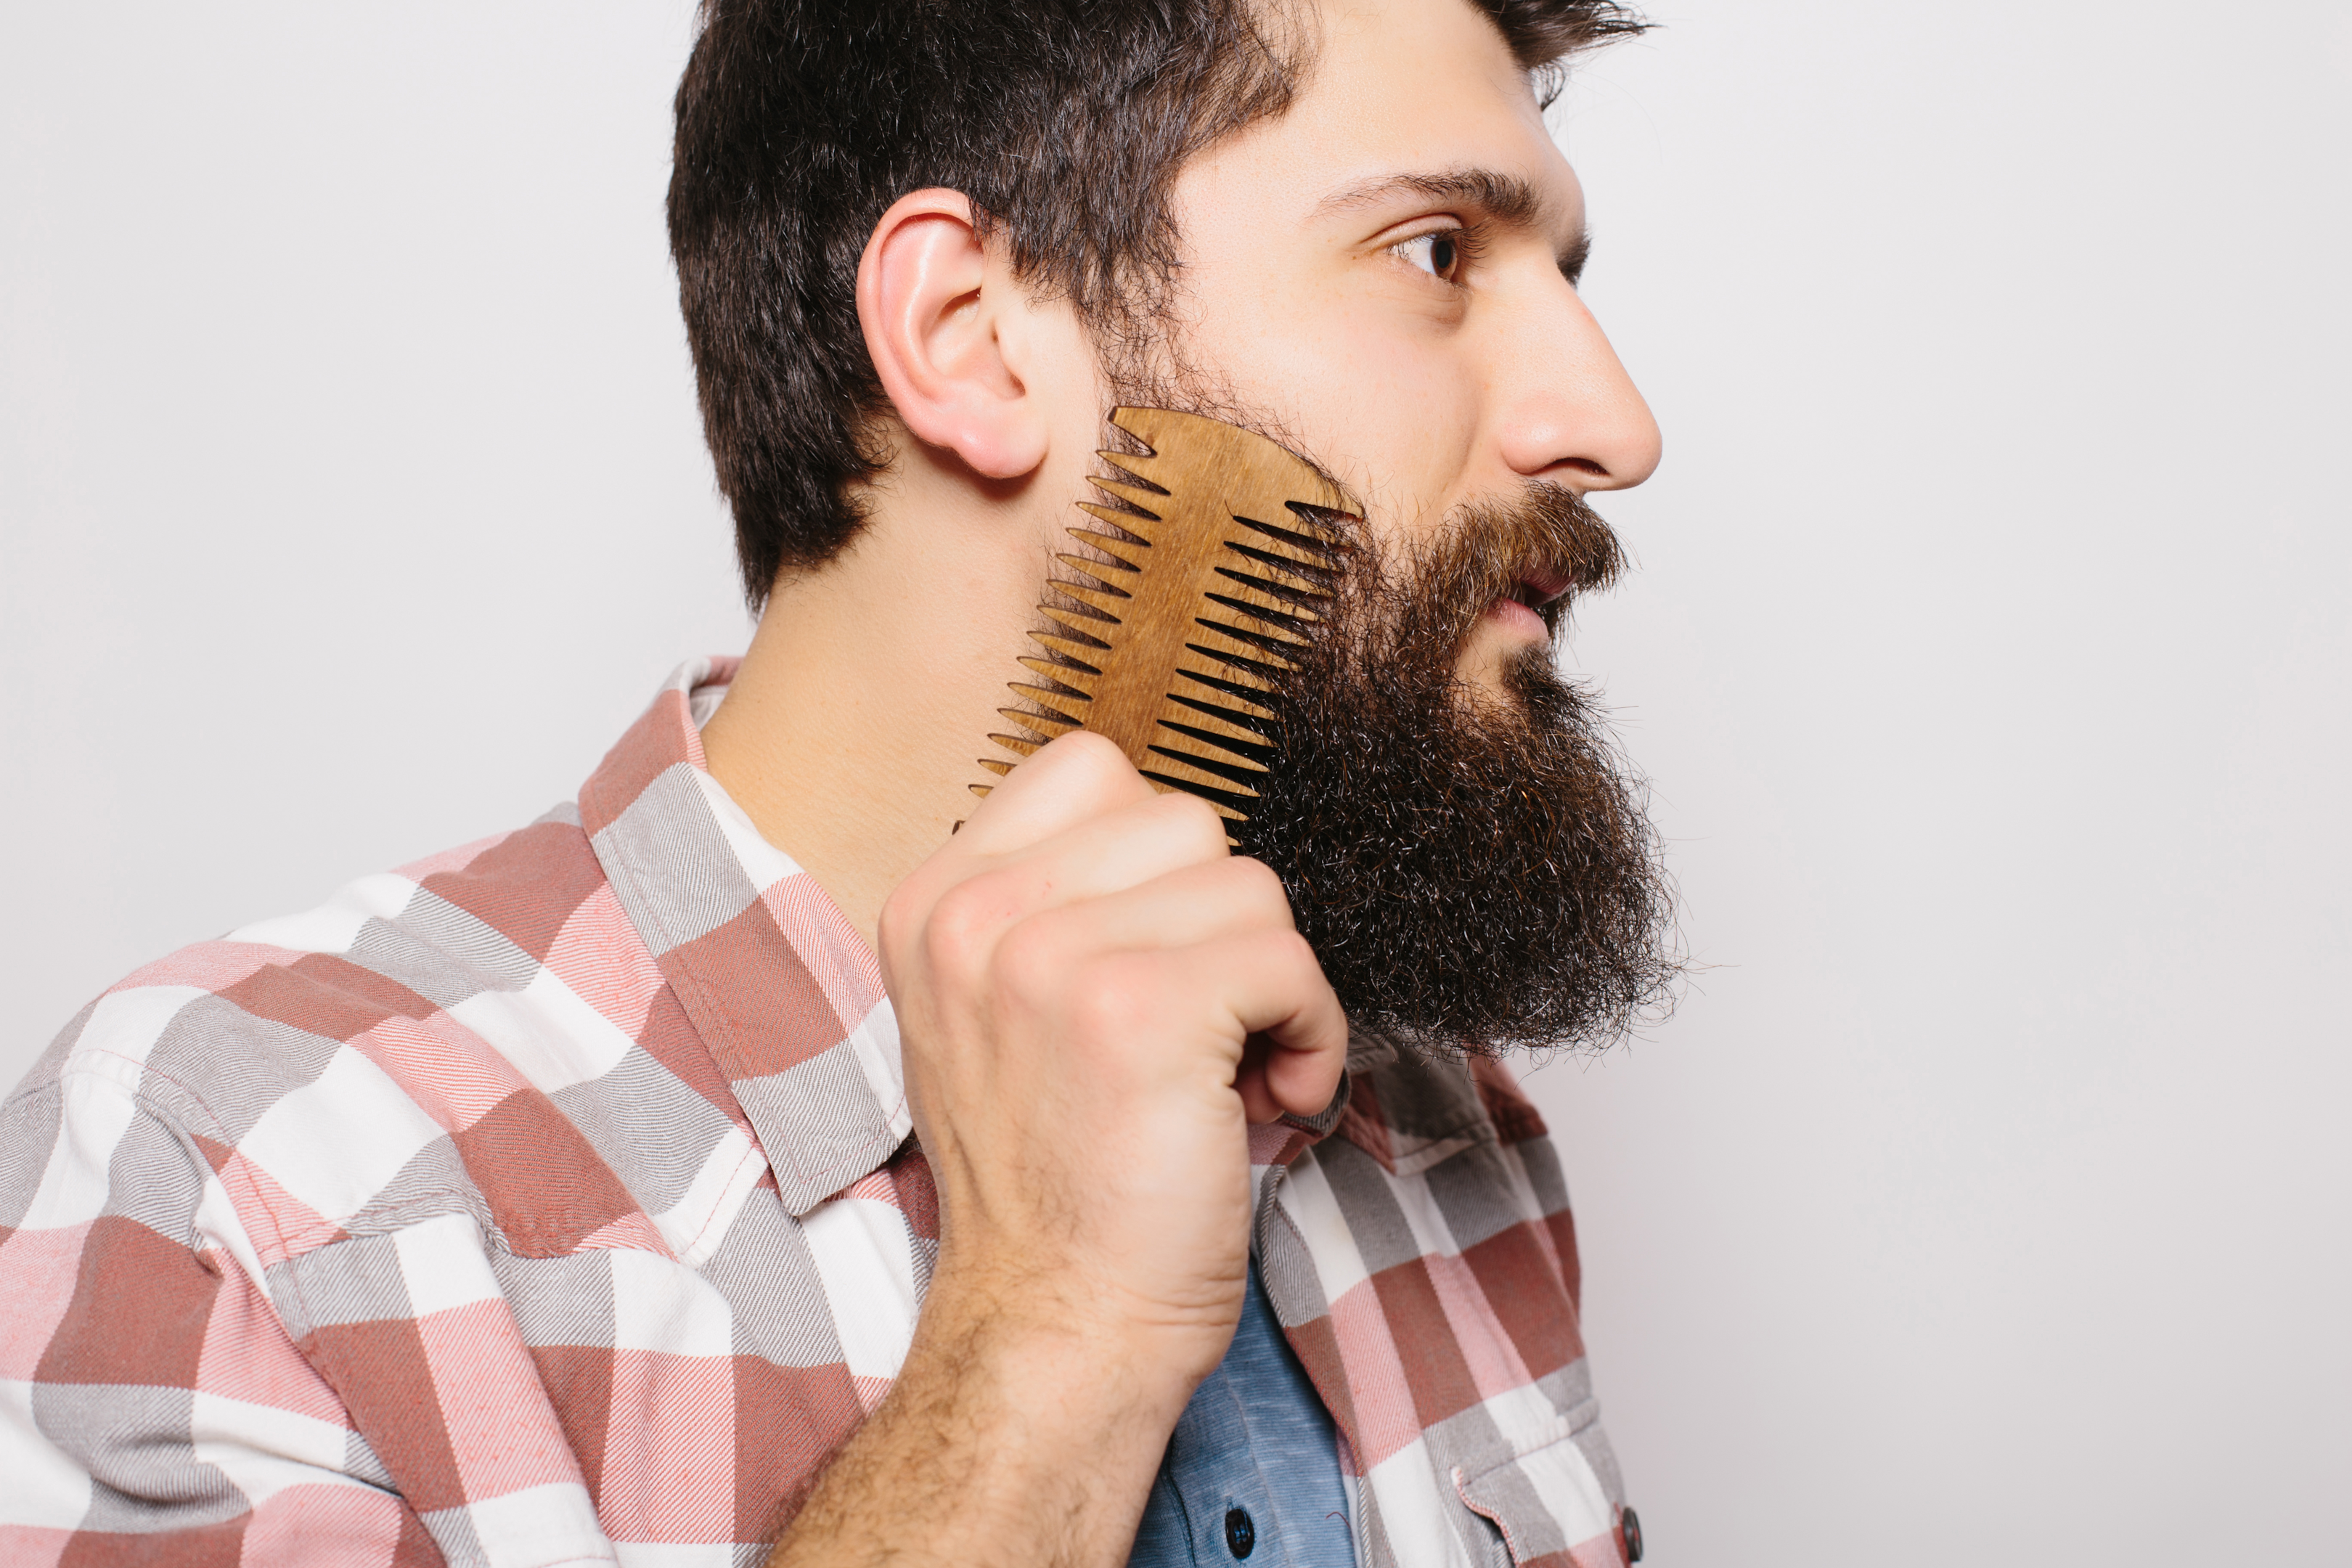 Benefits of facial hair for men